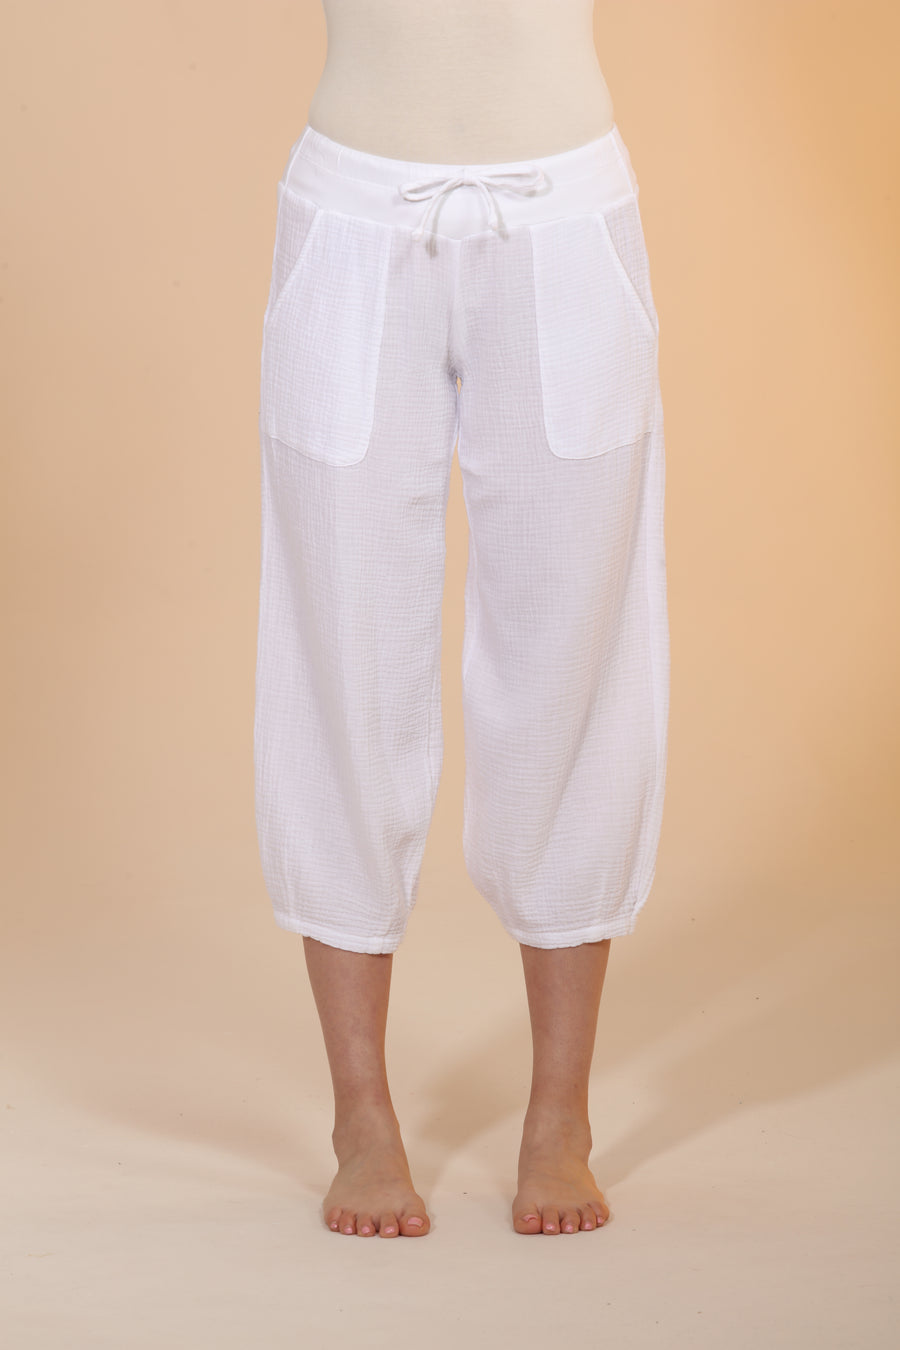 Buy Elleven White Cropped Pants for Women's Online @ Tata CLiQ